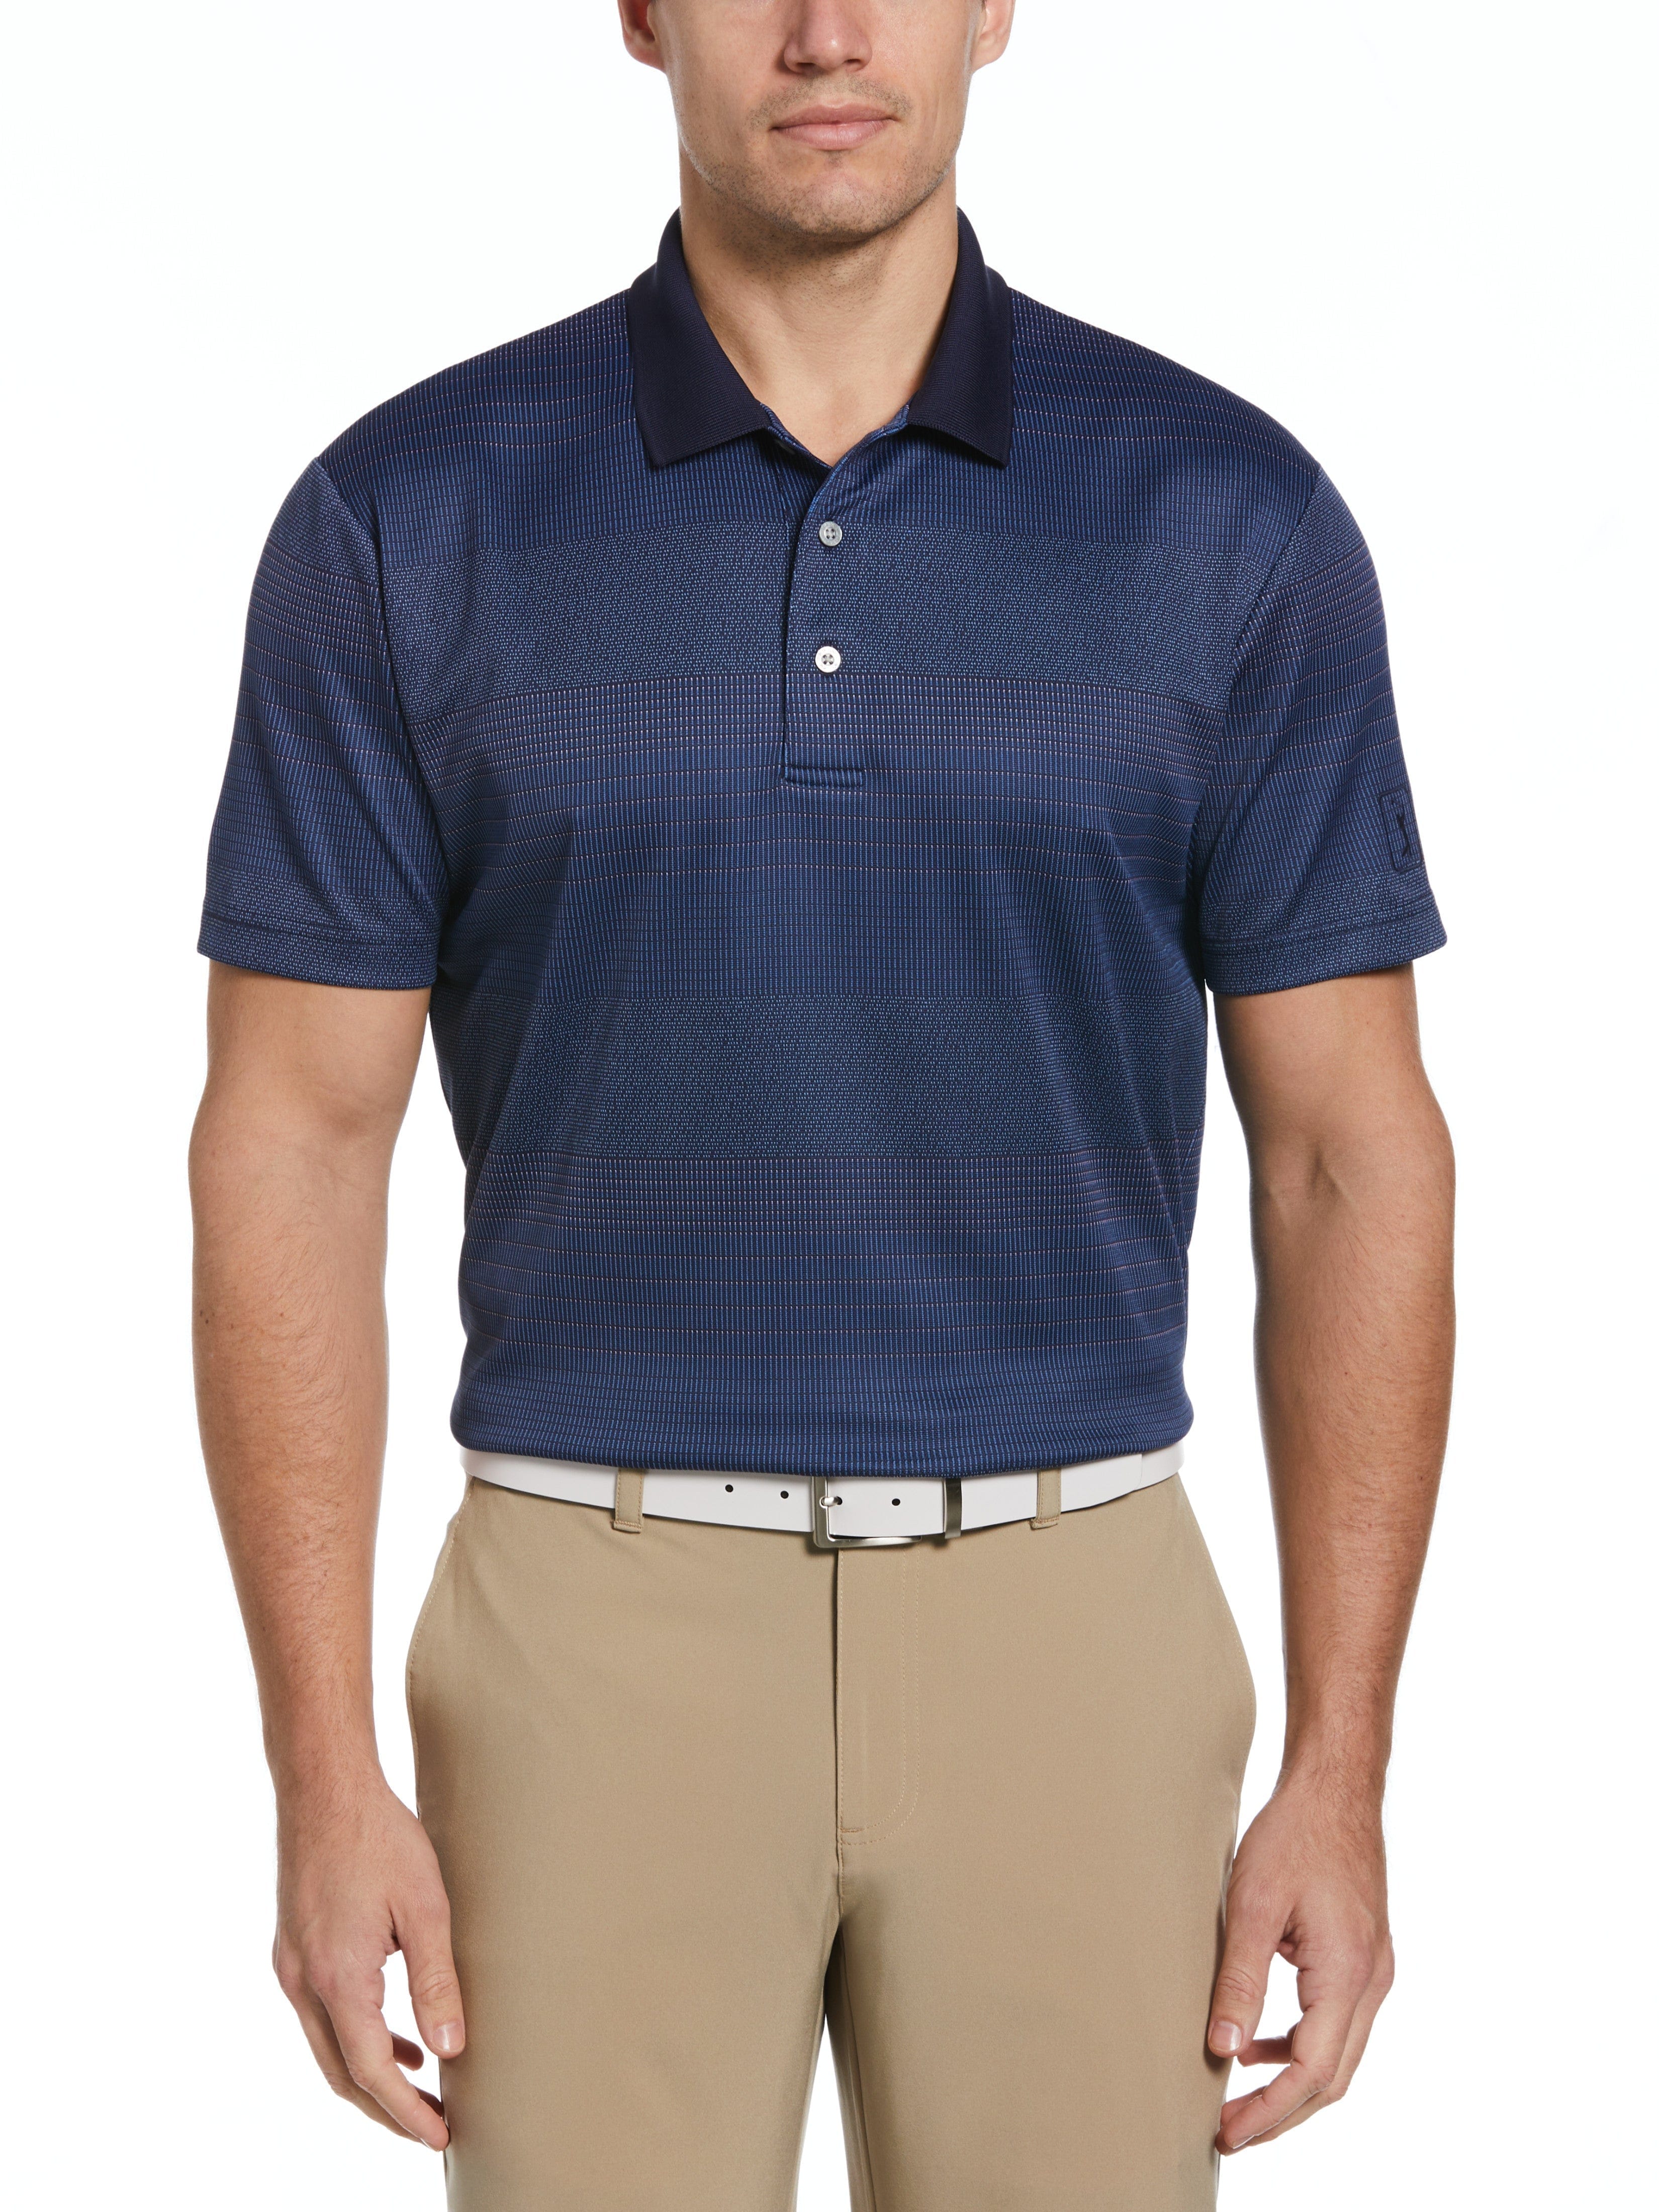 PGA TOUR Apparel Mens Large Scale Birdseye Stripe Jacquard Golf Polo Shirt, Size Medium, Navy Blue, 100% Polyester | Golf Apparel Shop